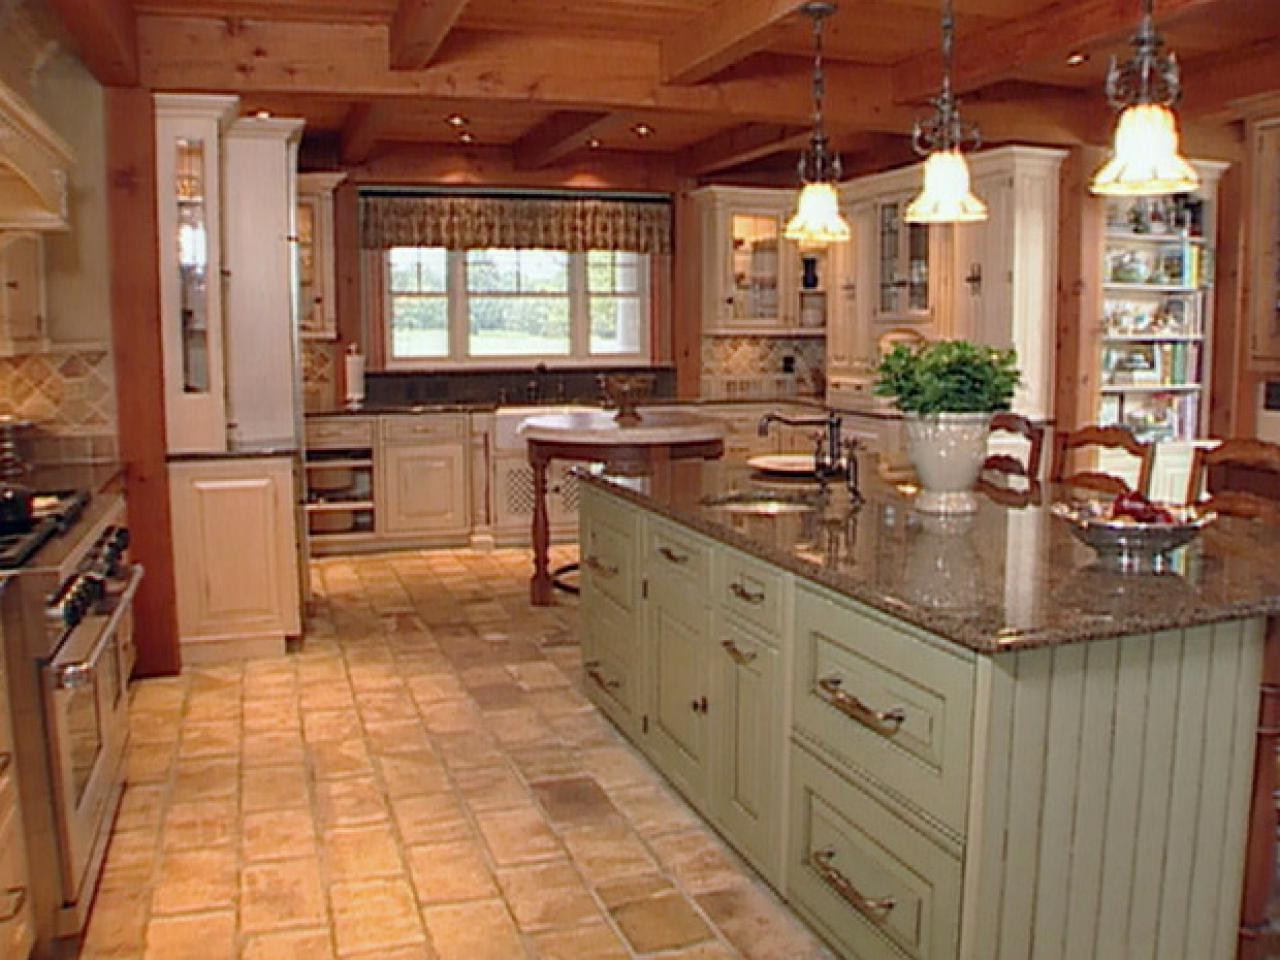 Remodel Ideas For Kitchen
 Older Home Kitchen Remodeling Ideas